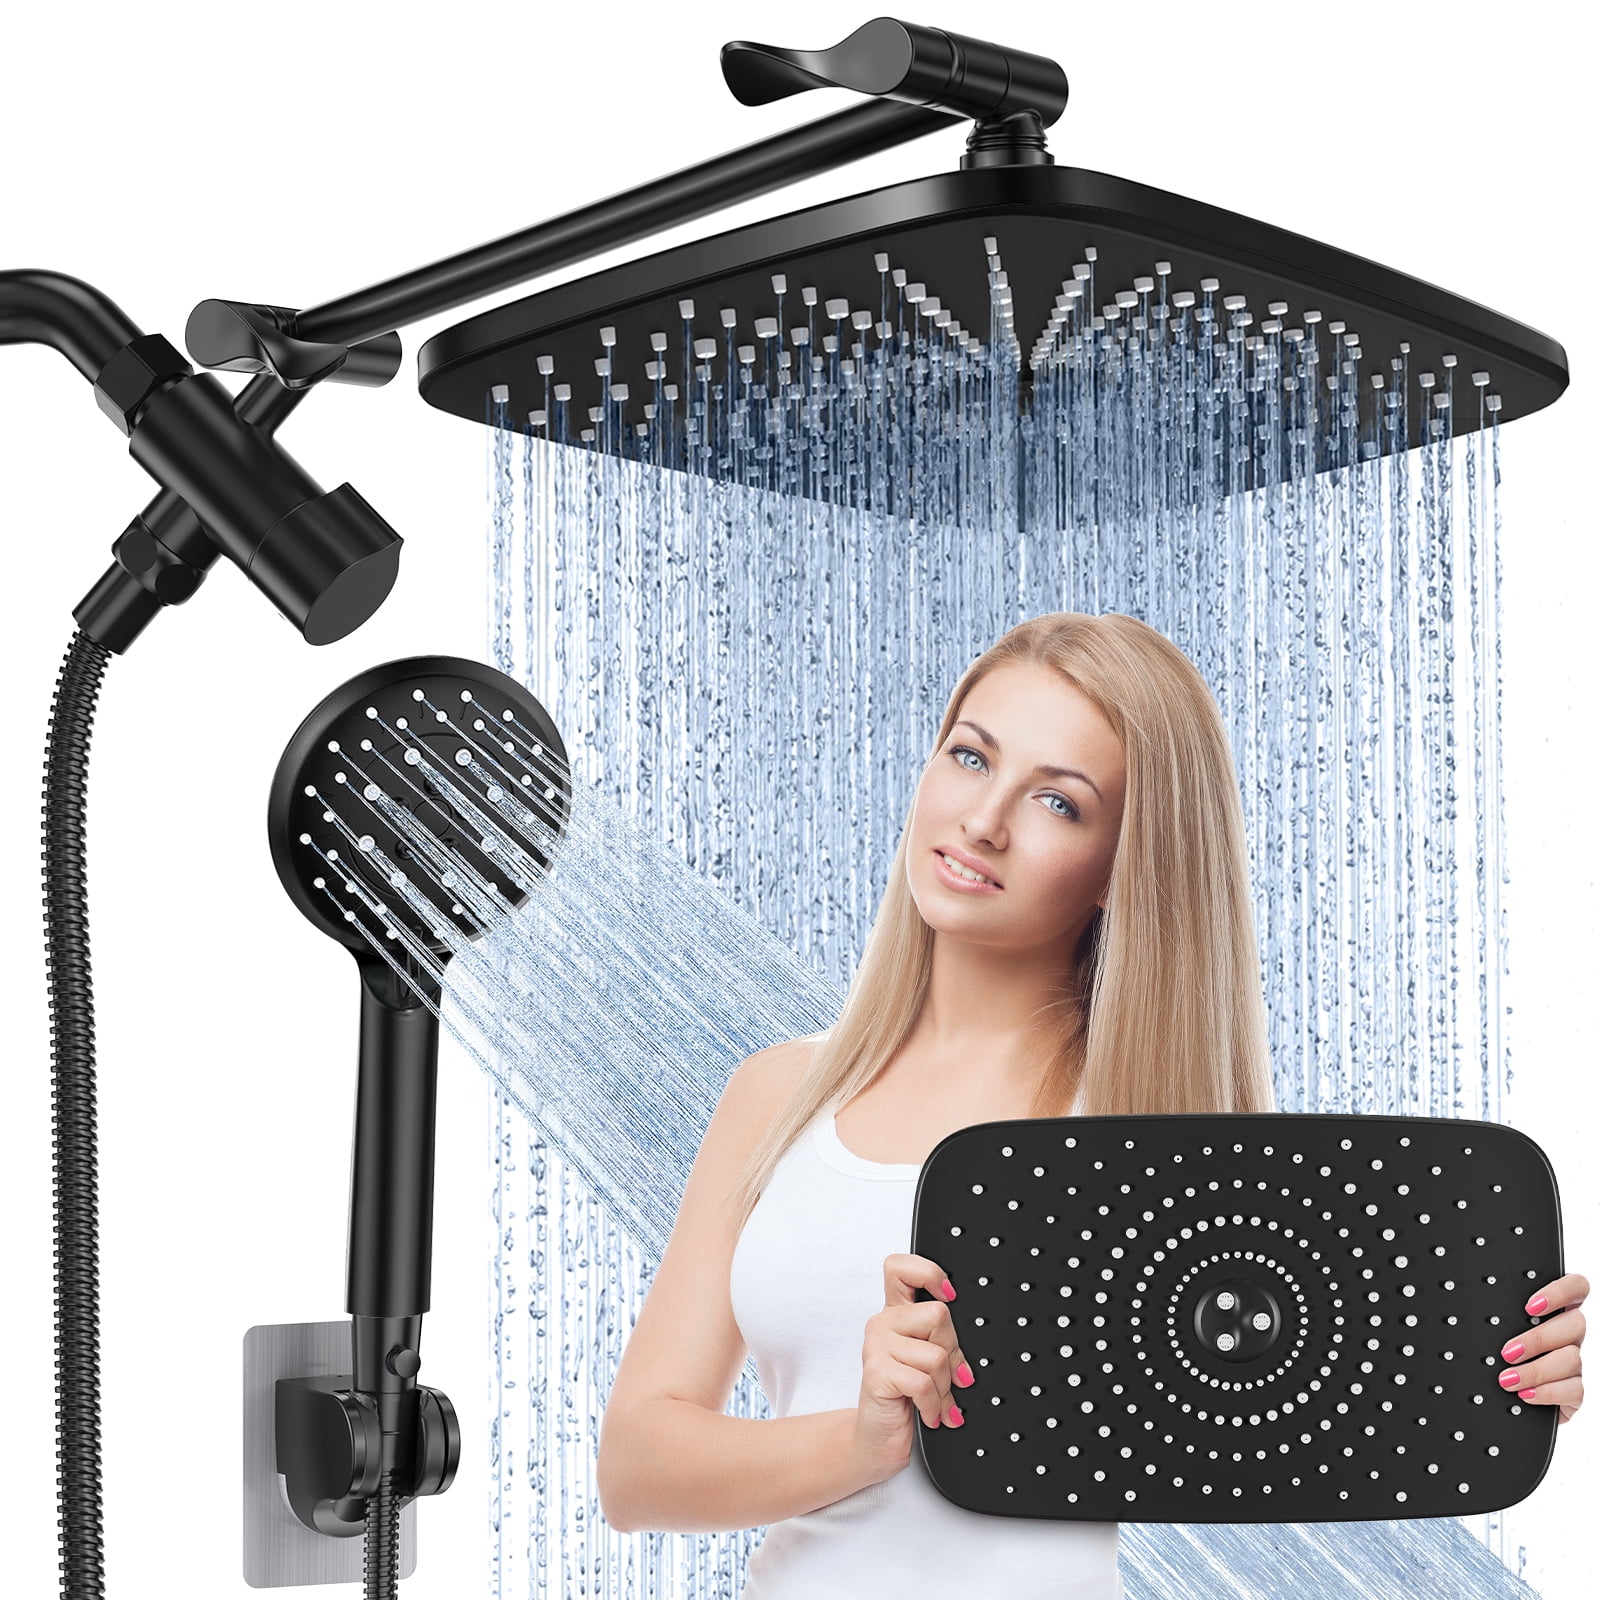 5-Setting High Pressure Shower Head, 12 inch Rain Shower Head with Handheld and Hose,Black